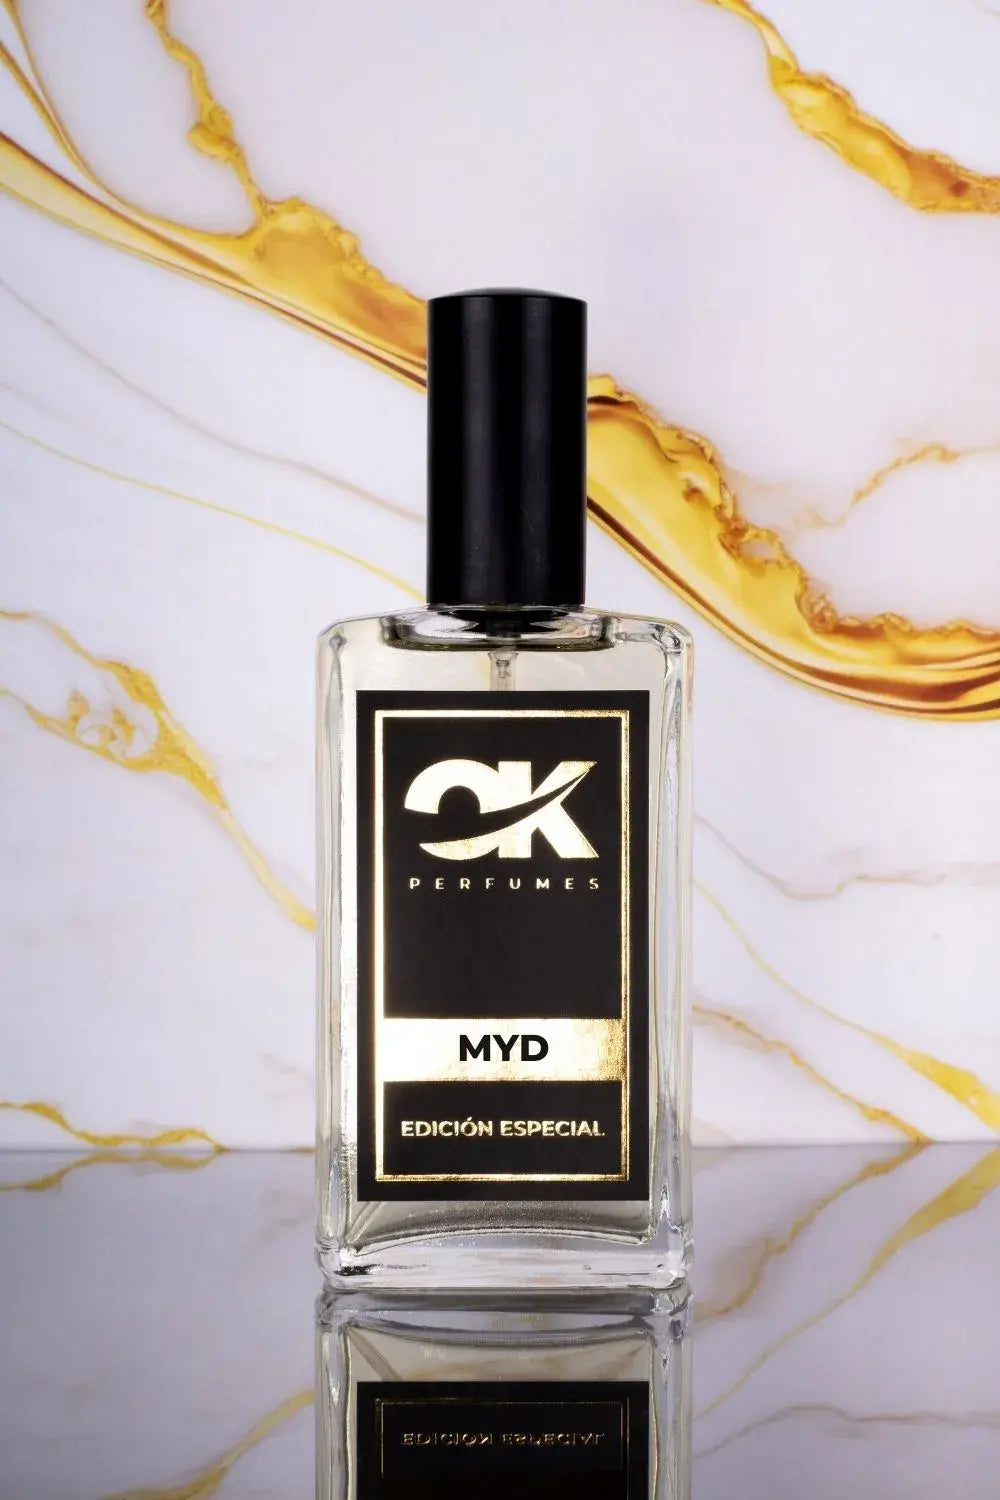 MYD - uma reminiscência de Myriad by LV da Louis Vuitton